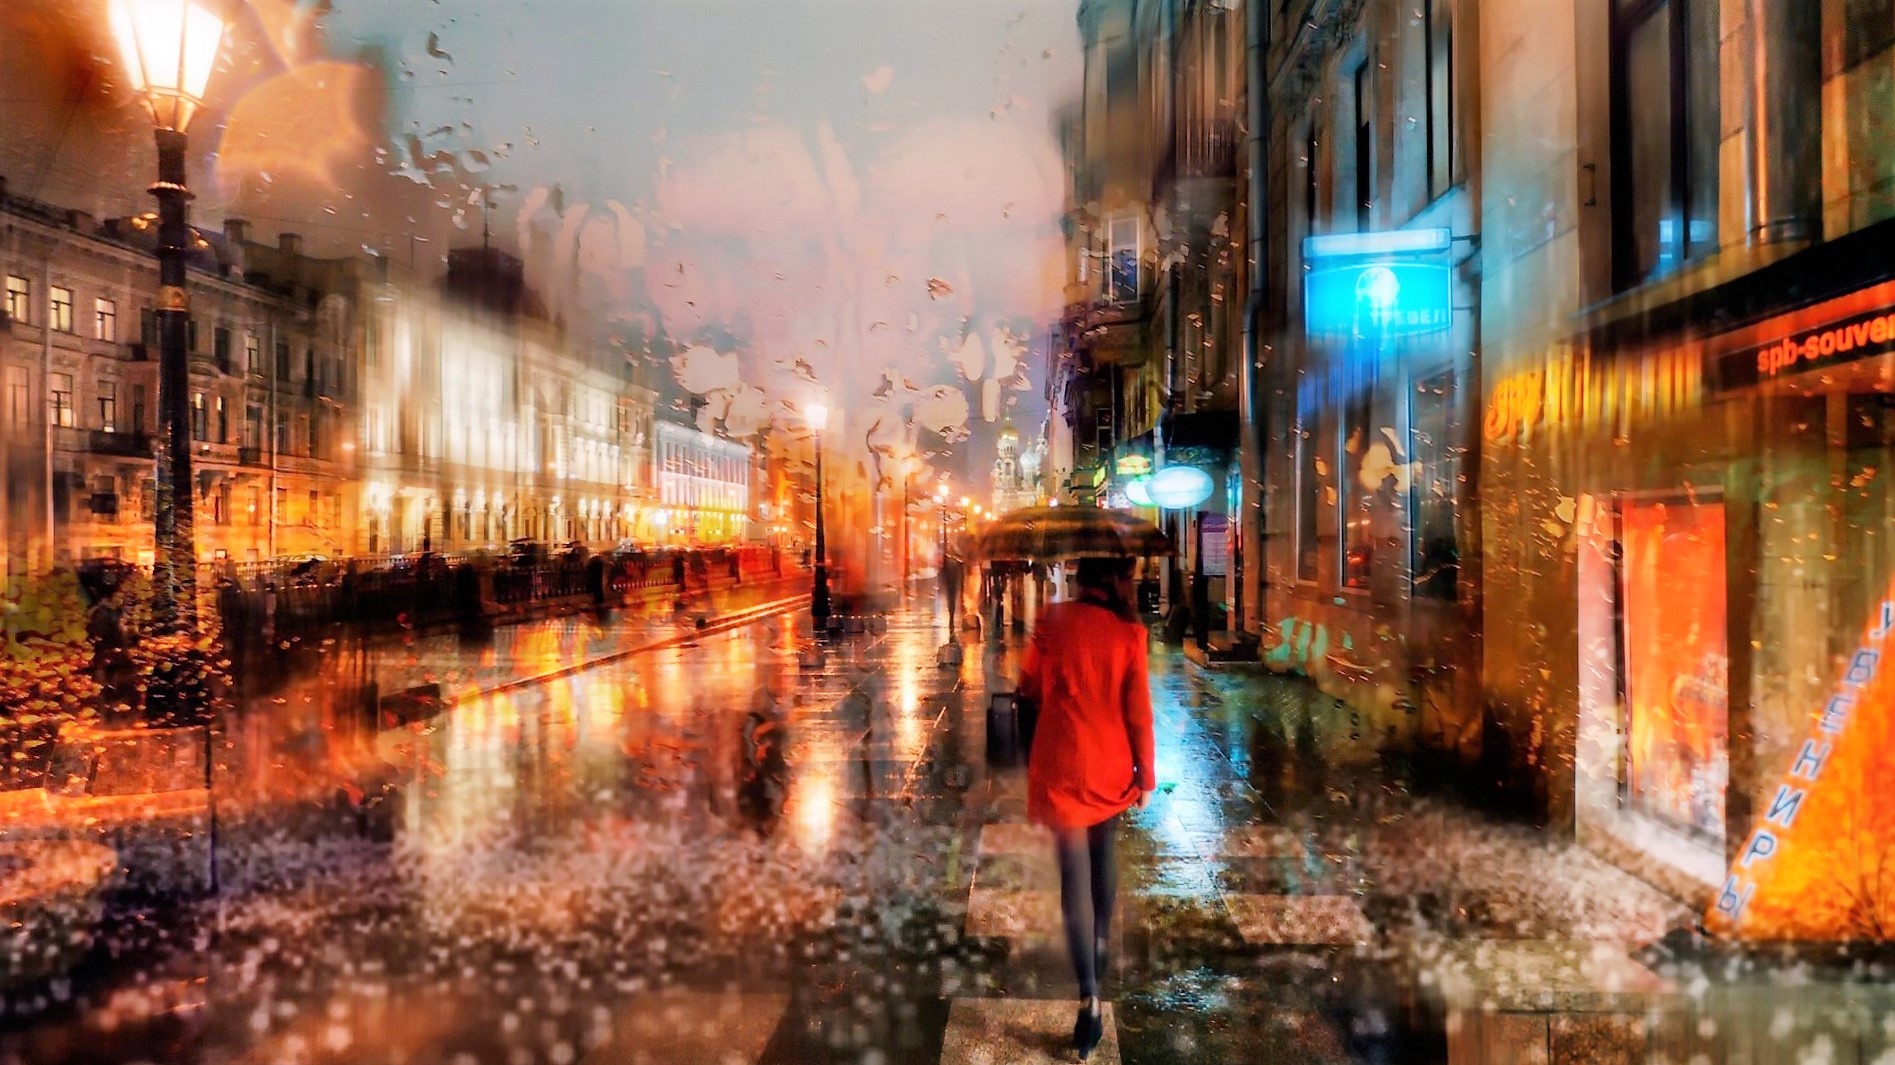 Download Wallpaper Rain Girl Russia Street Saint Petersburg Gordeev, 1895x Rainy Autumn Of Saint Petersburg, Russia